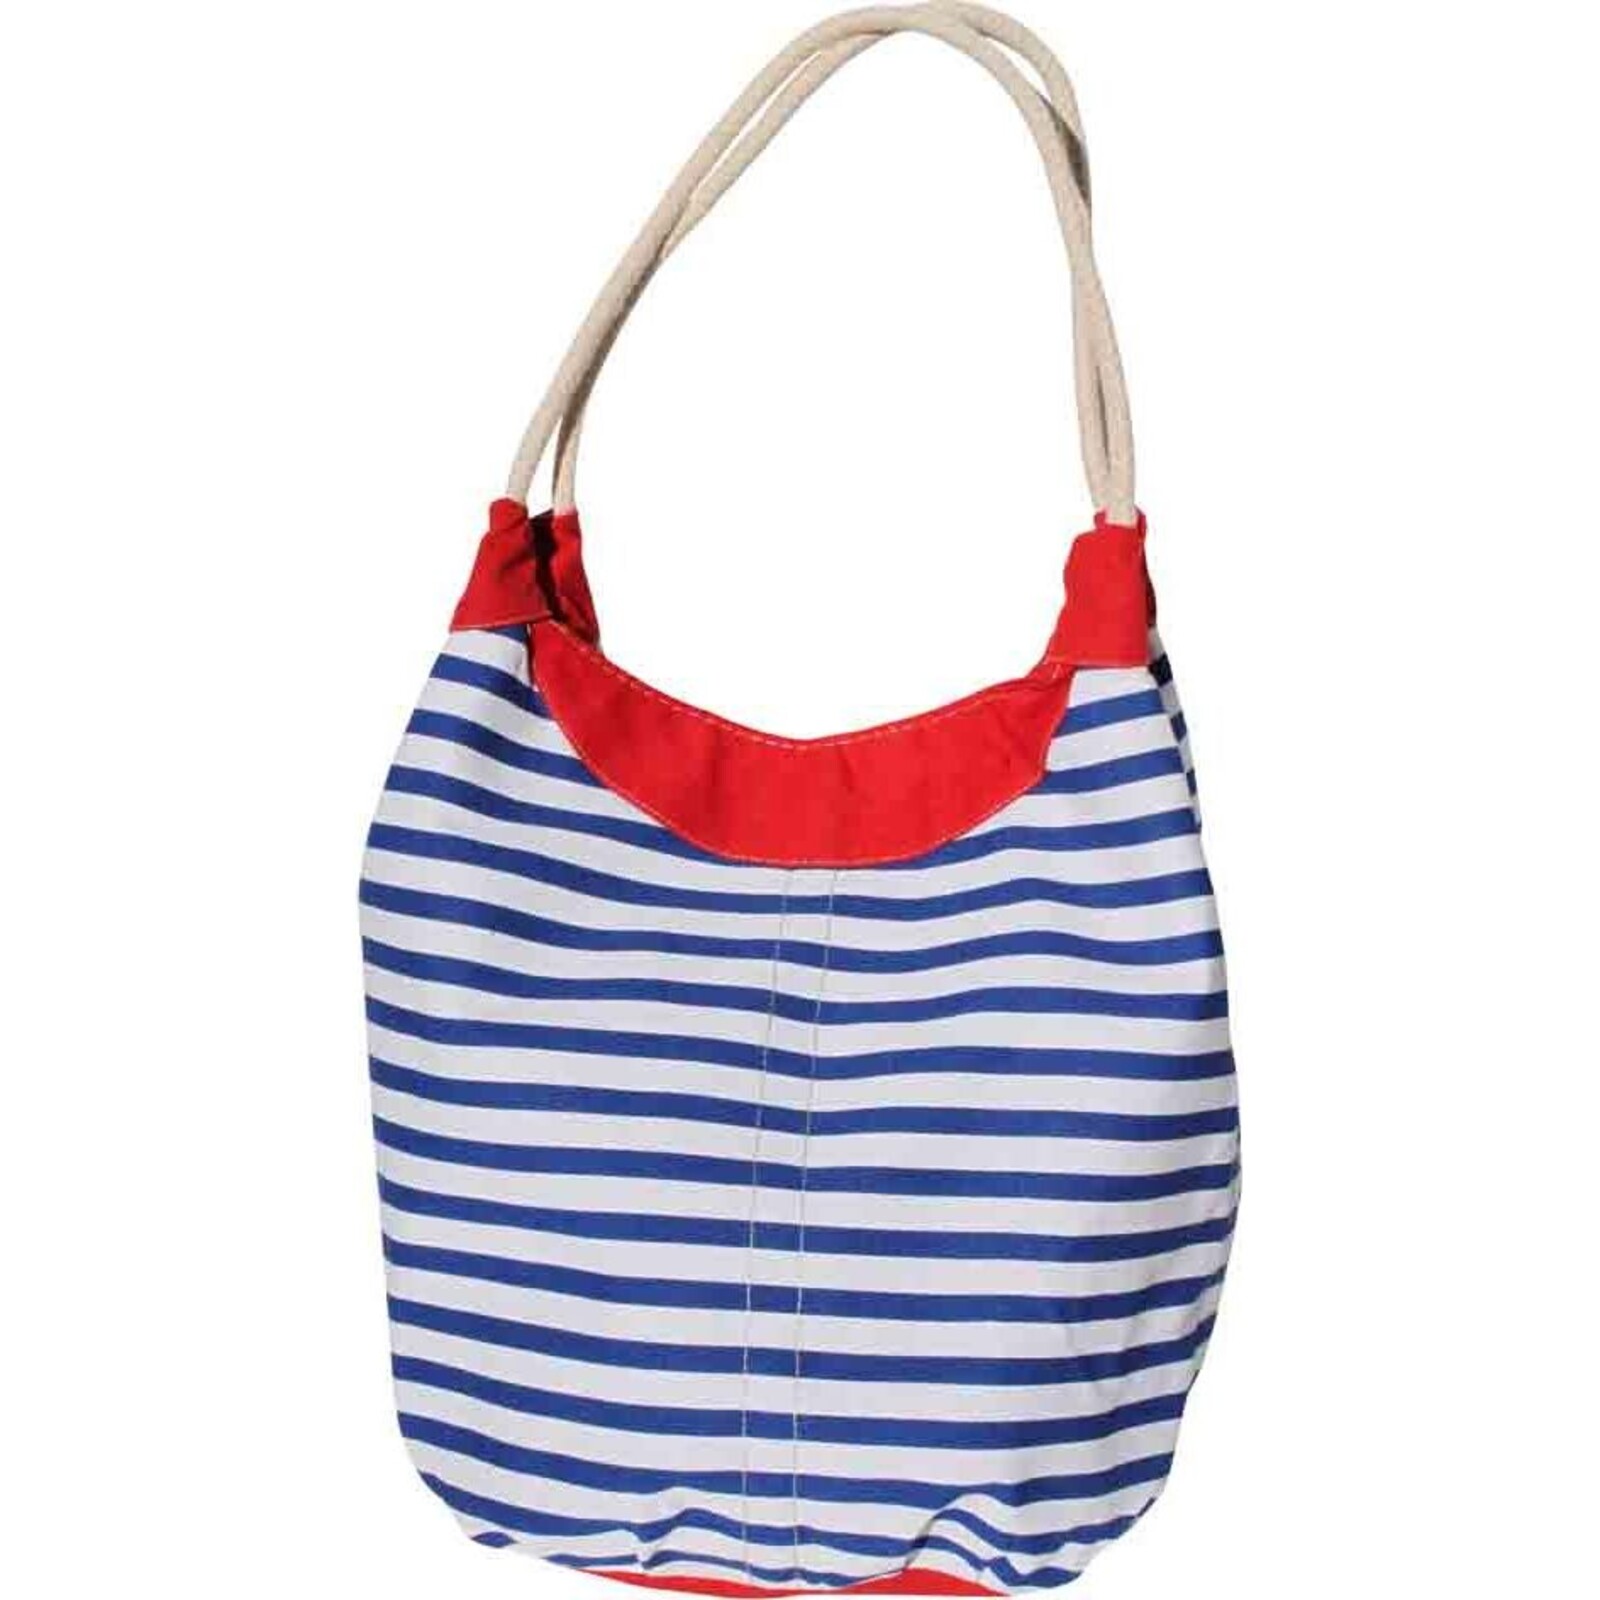 Casual Bag - Blue Stripe Red